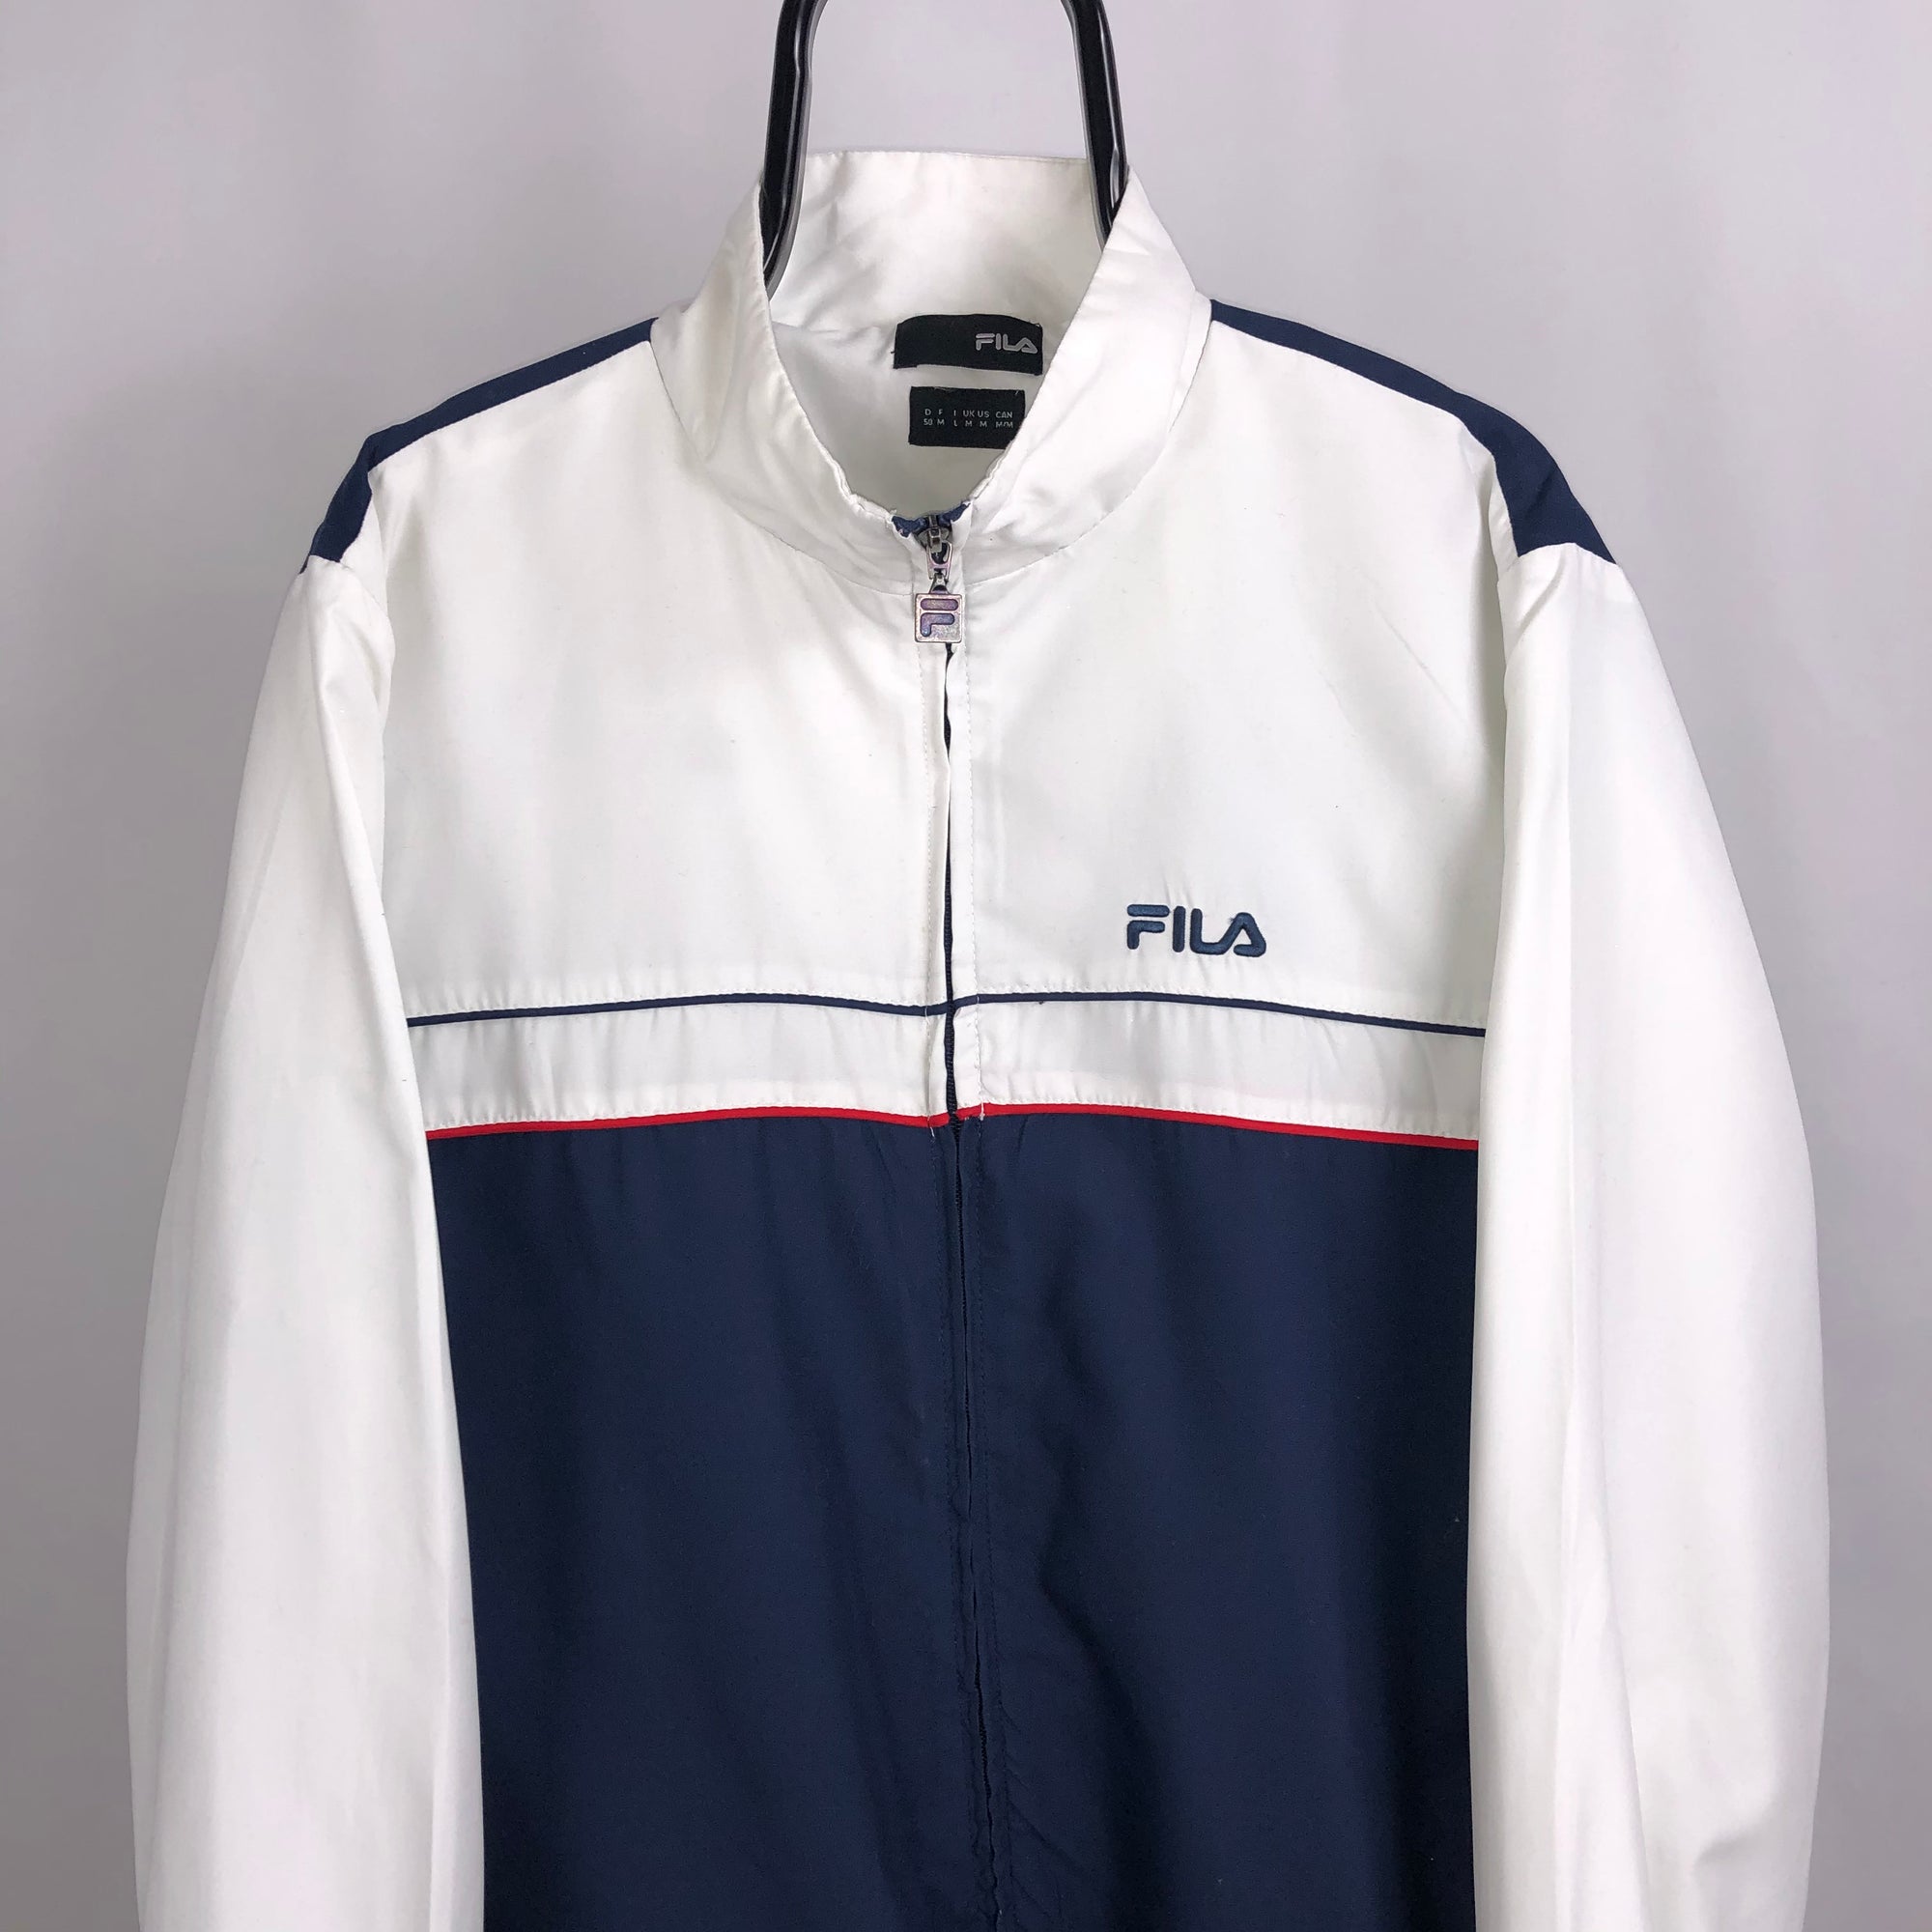 Vintage Fila Track Jacket in White/Navy - Men's Medium/Women's Large